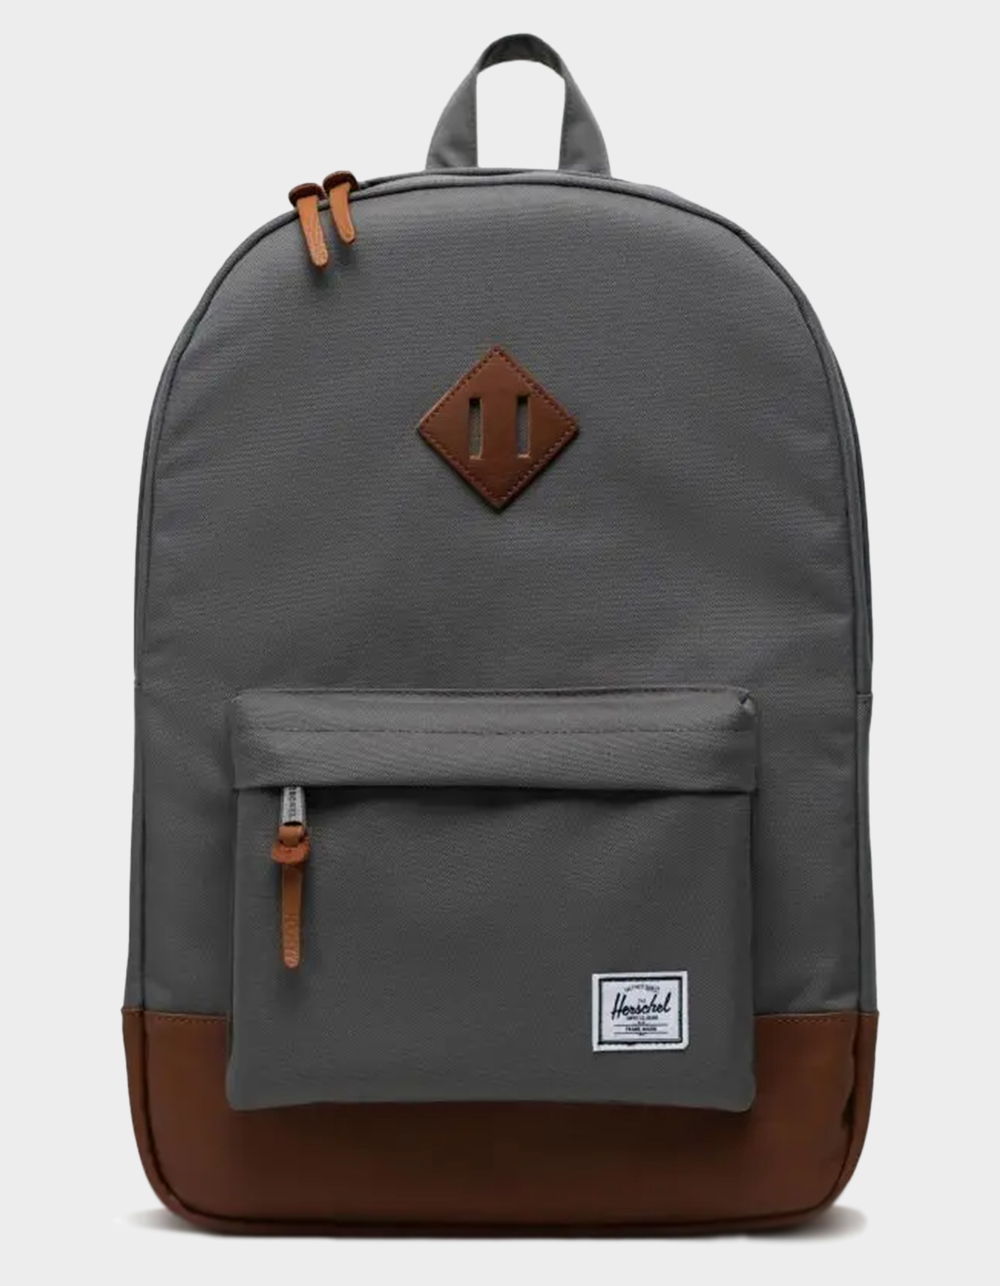 Herschel Supply Co. Backpacks & Bags | Tillys